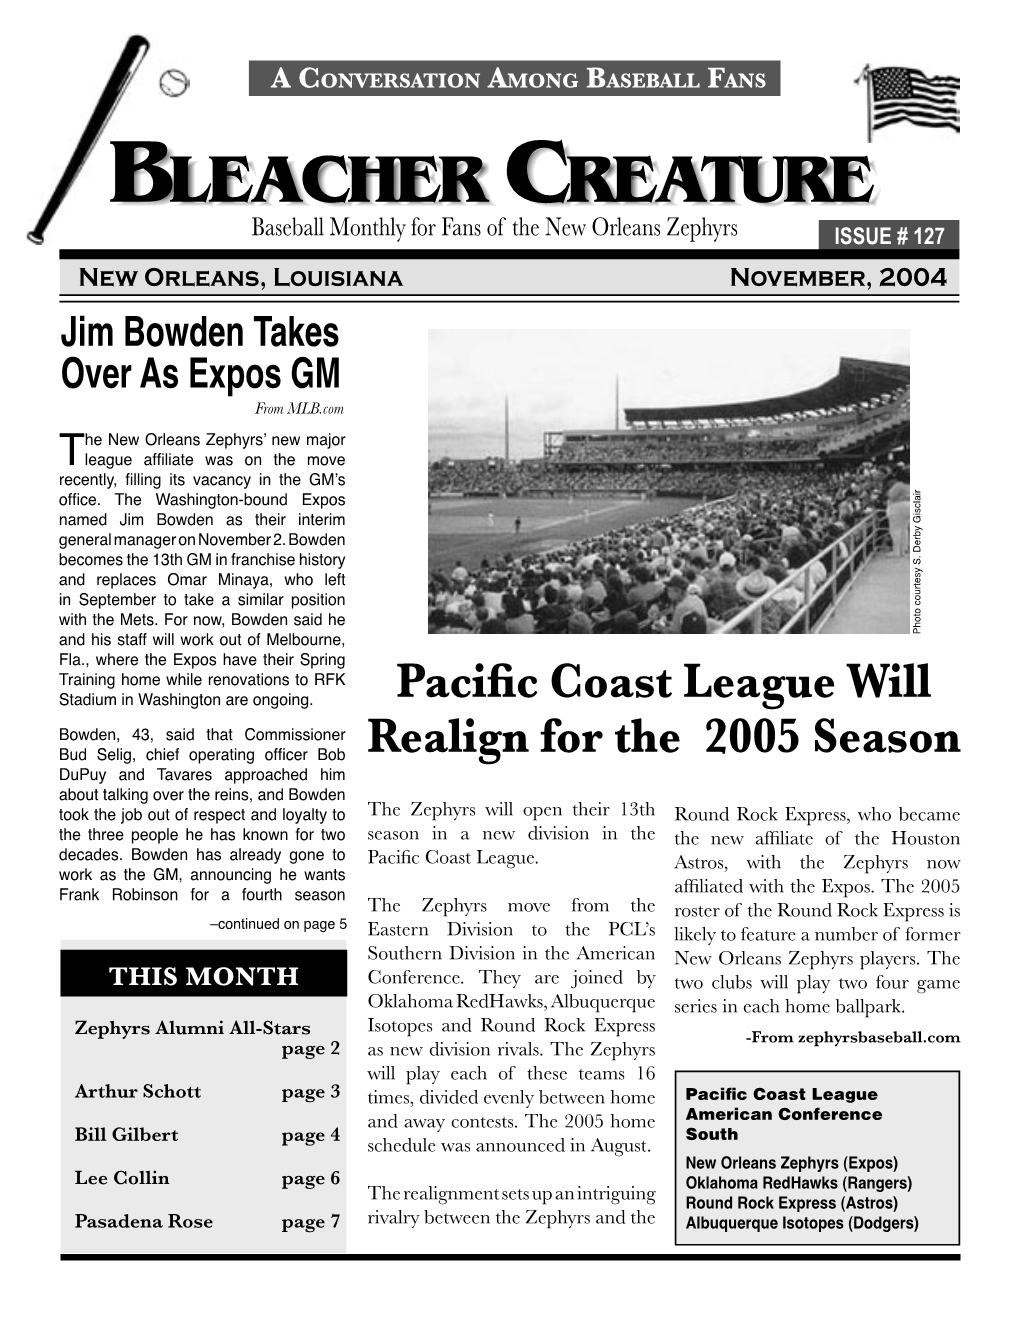 Pacific Coast League Will Realign for the 2005 Season